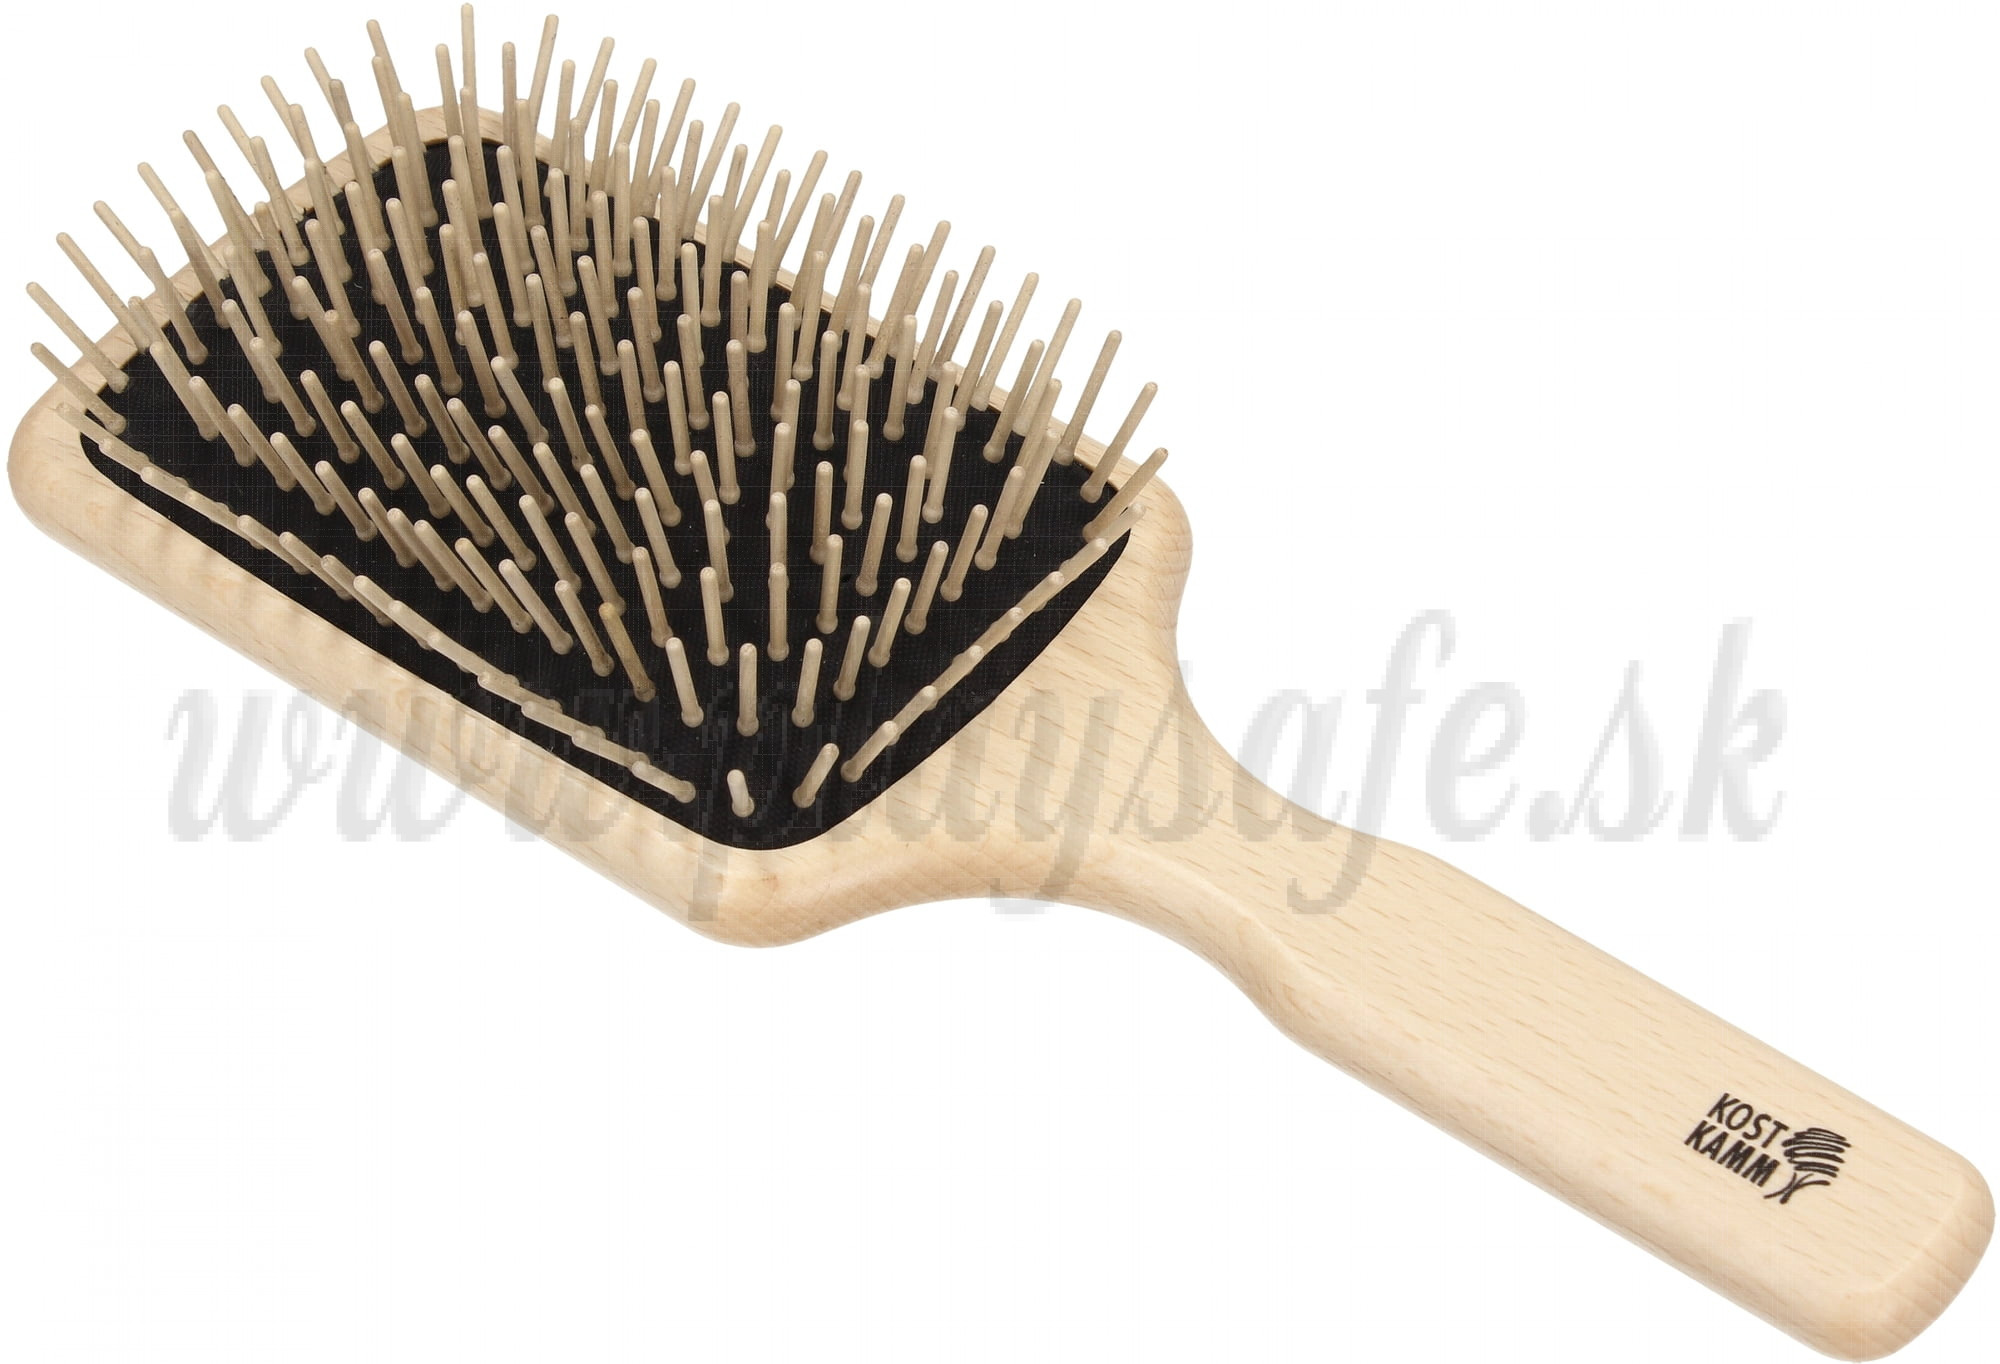 Kostkamm Wooden Paddle Brush